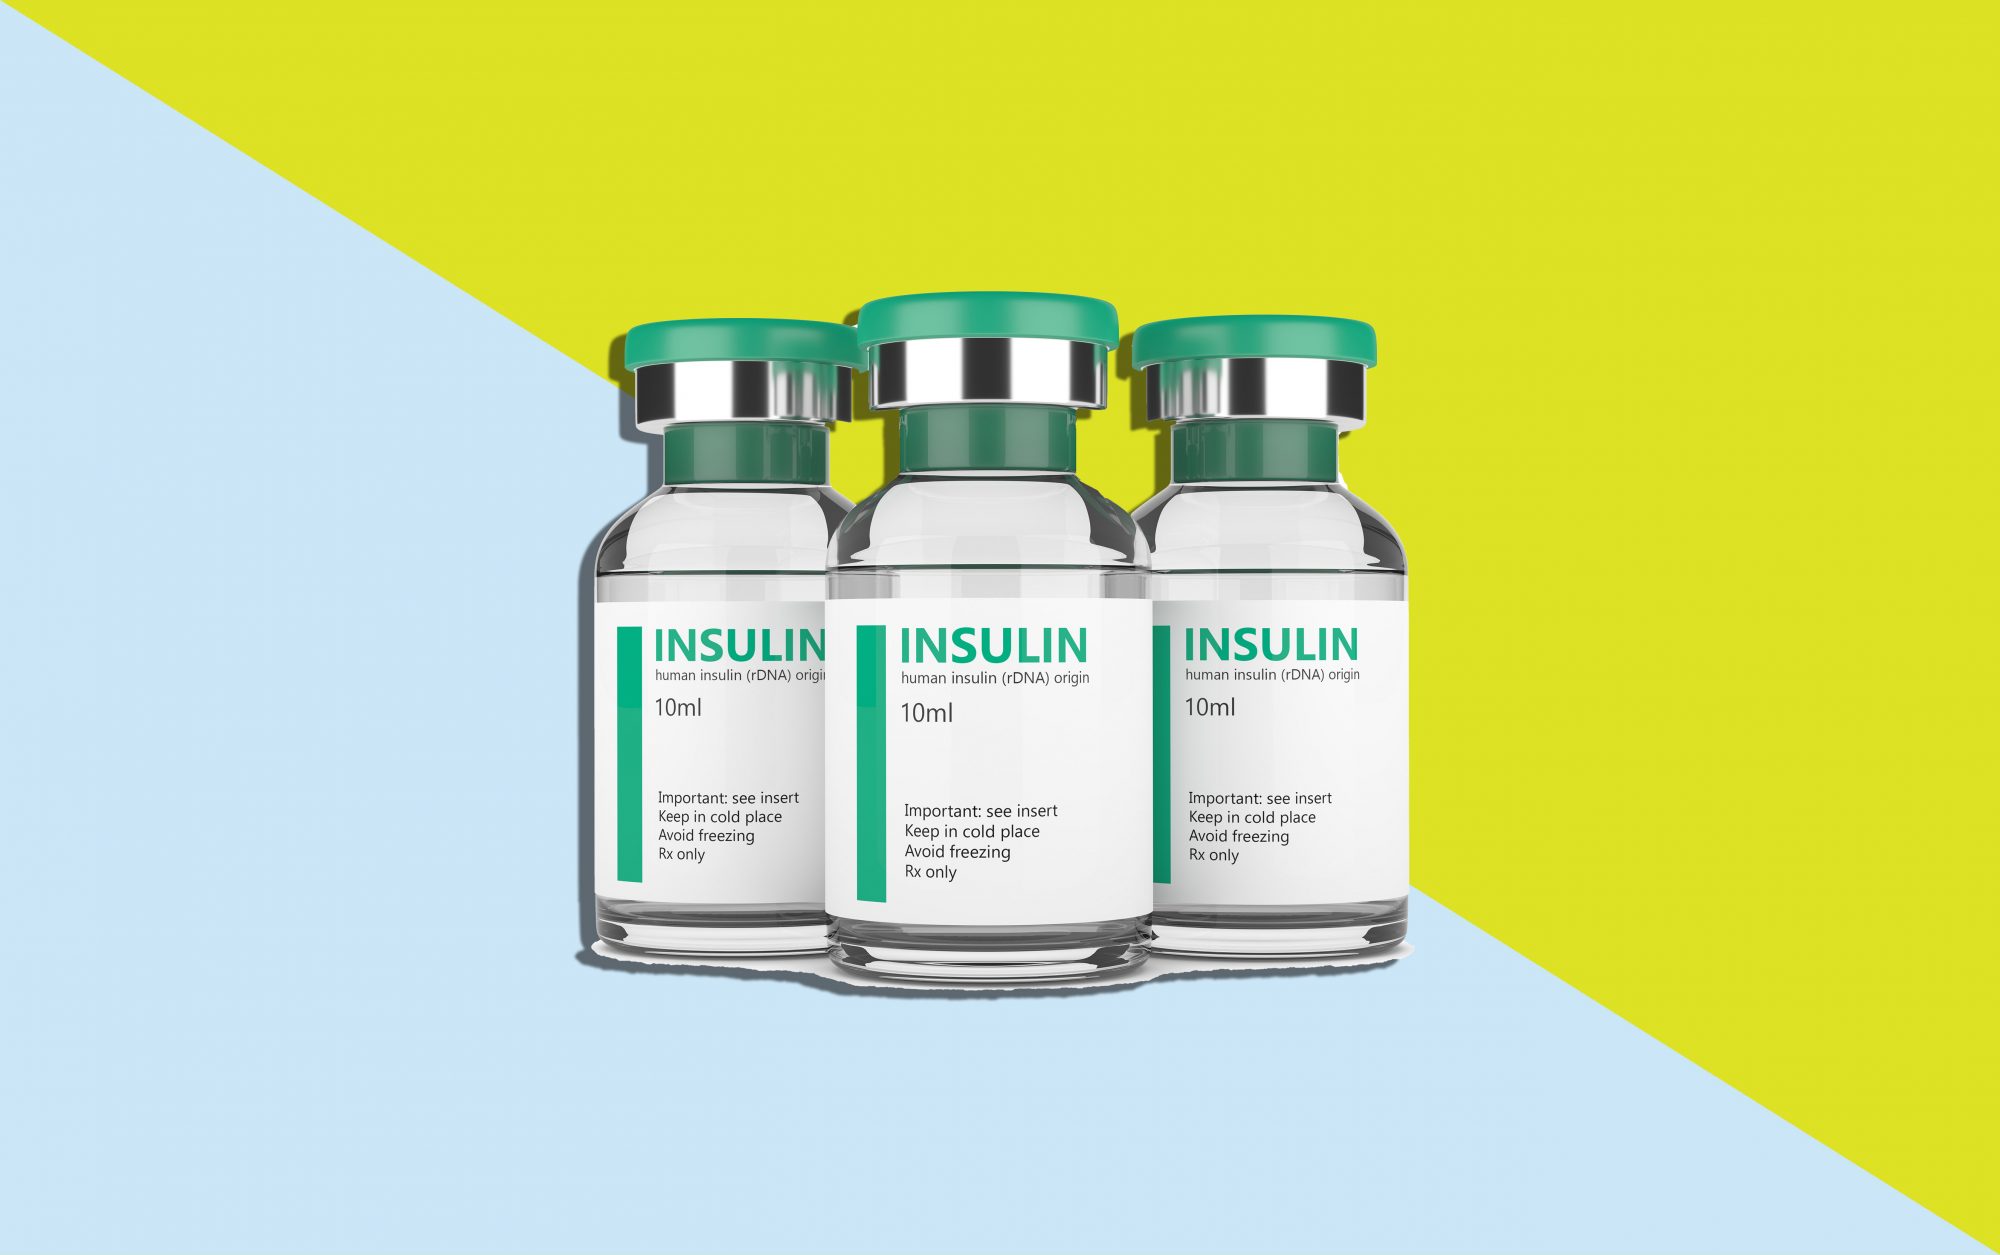 An image of insulin bottles.